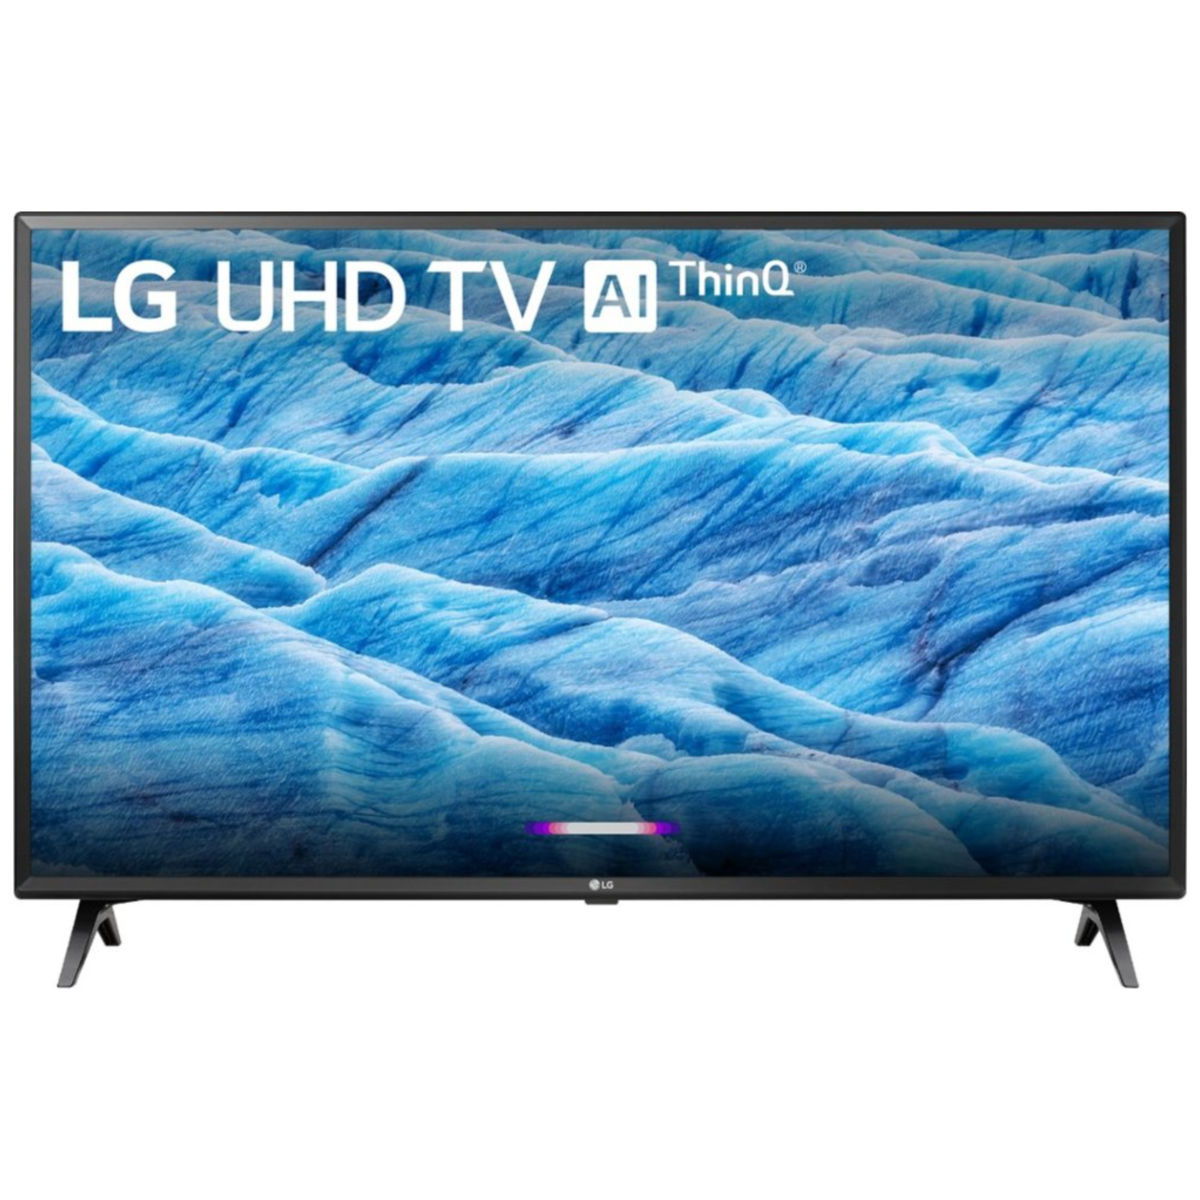 LG 49UM7300PUA 49-Inch 4K Ultra Smart HDTV